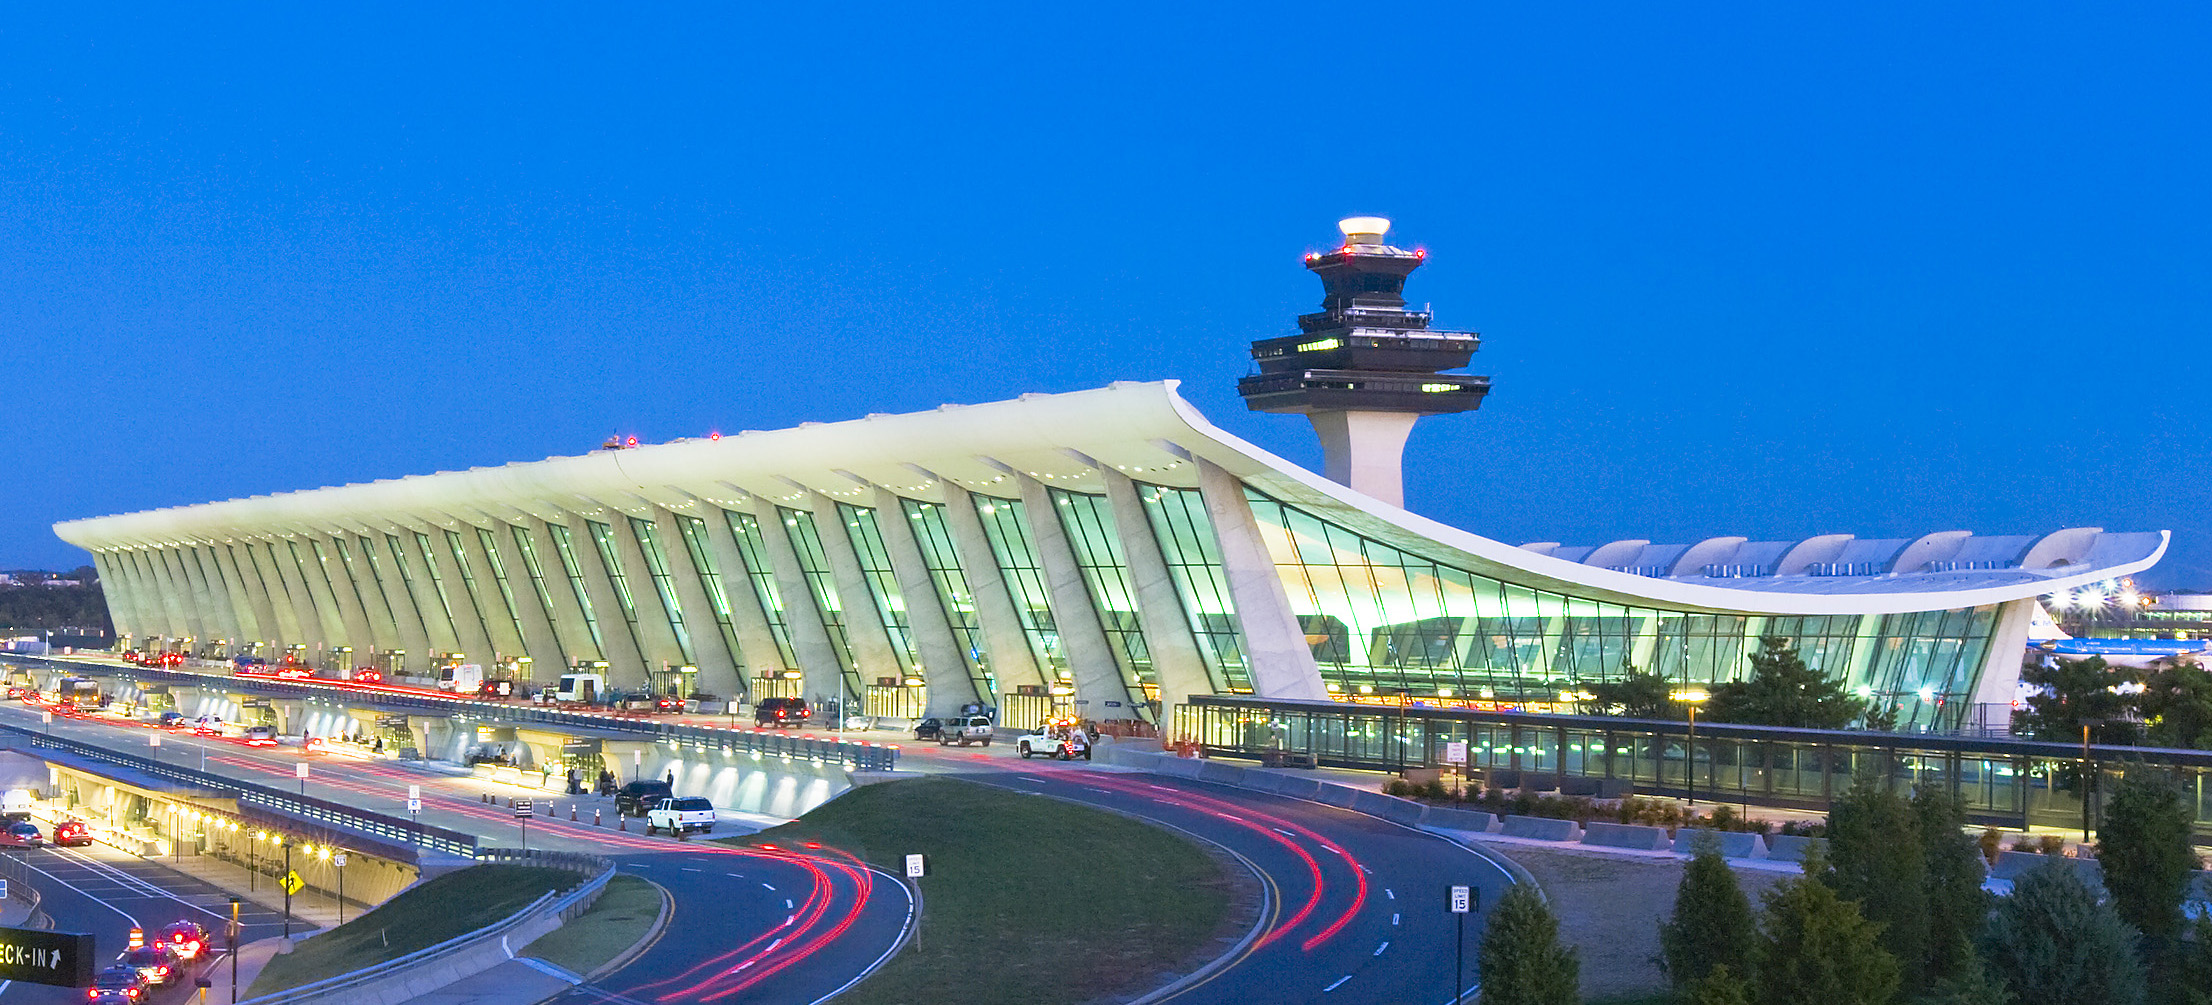 Washington Dulles Airport mwaa image.jpg